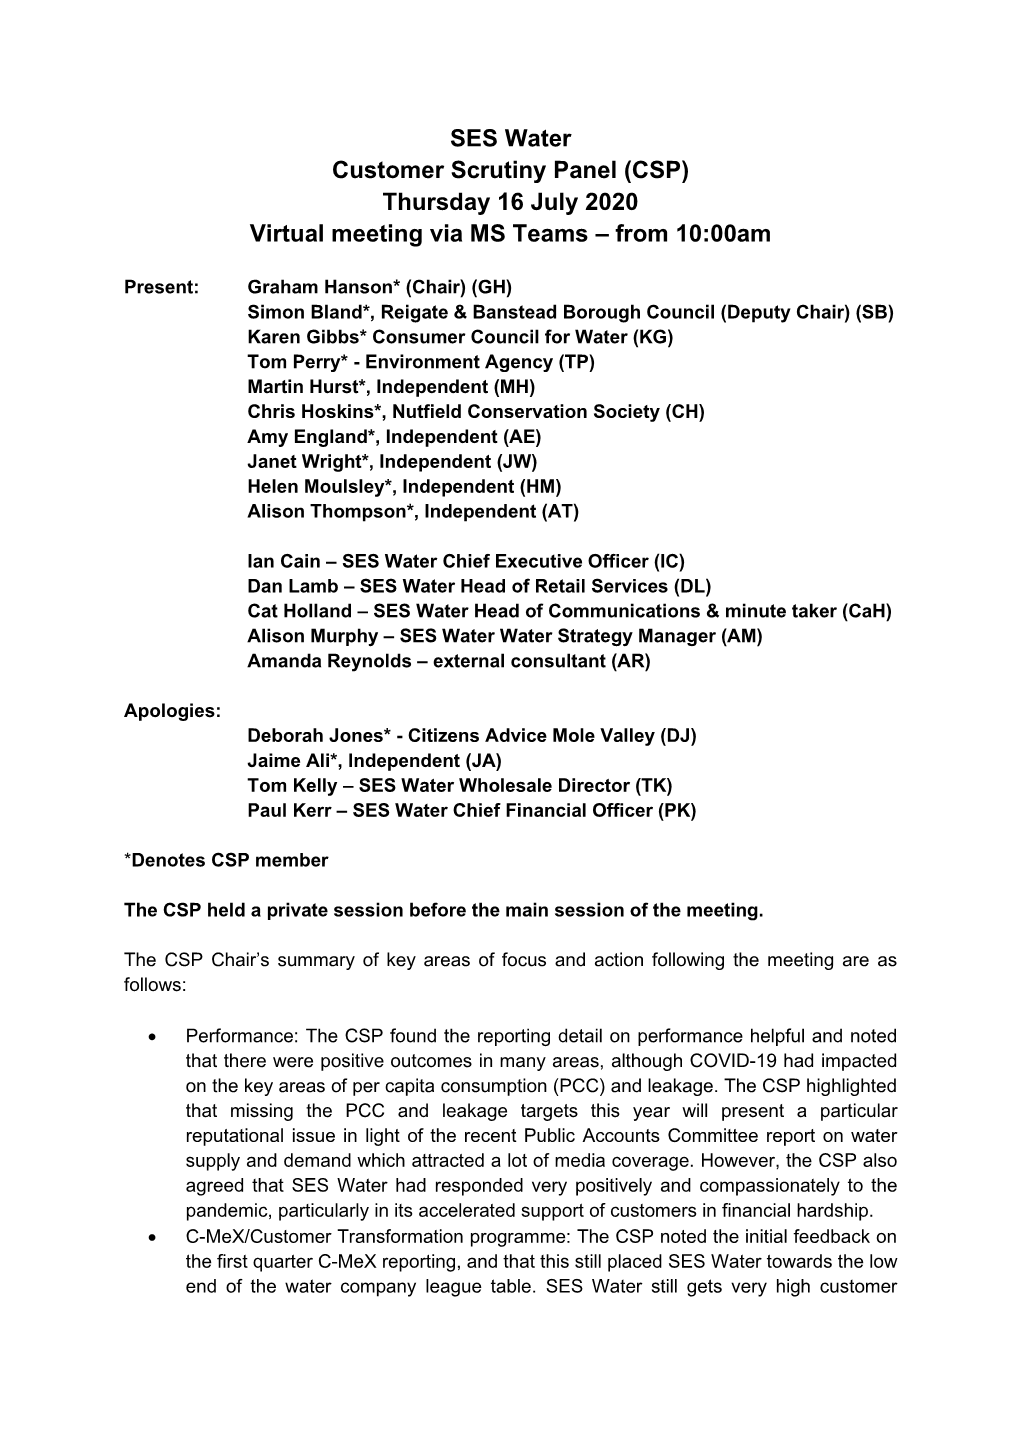 (CSP) Thursday 16 July 2020 Virtual Meeting Via MS Teams – from 10:00Am